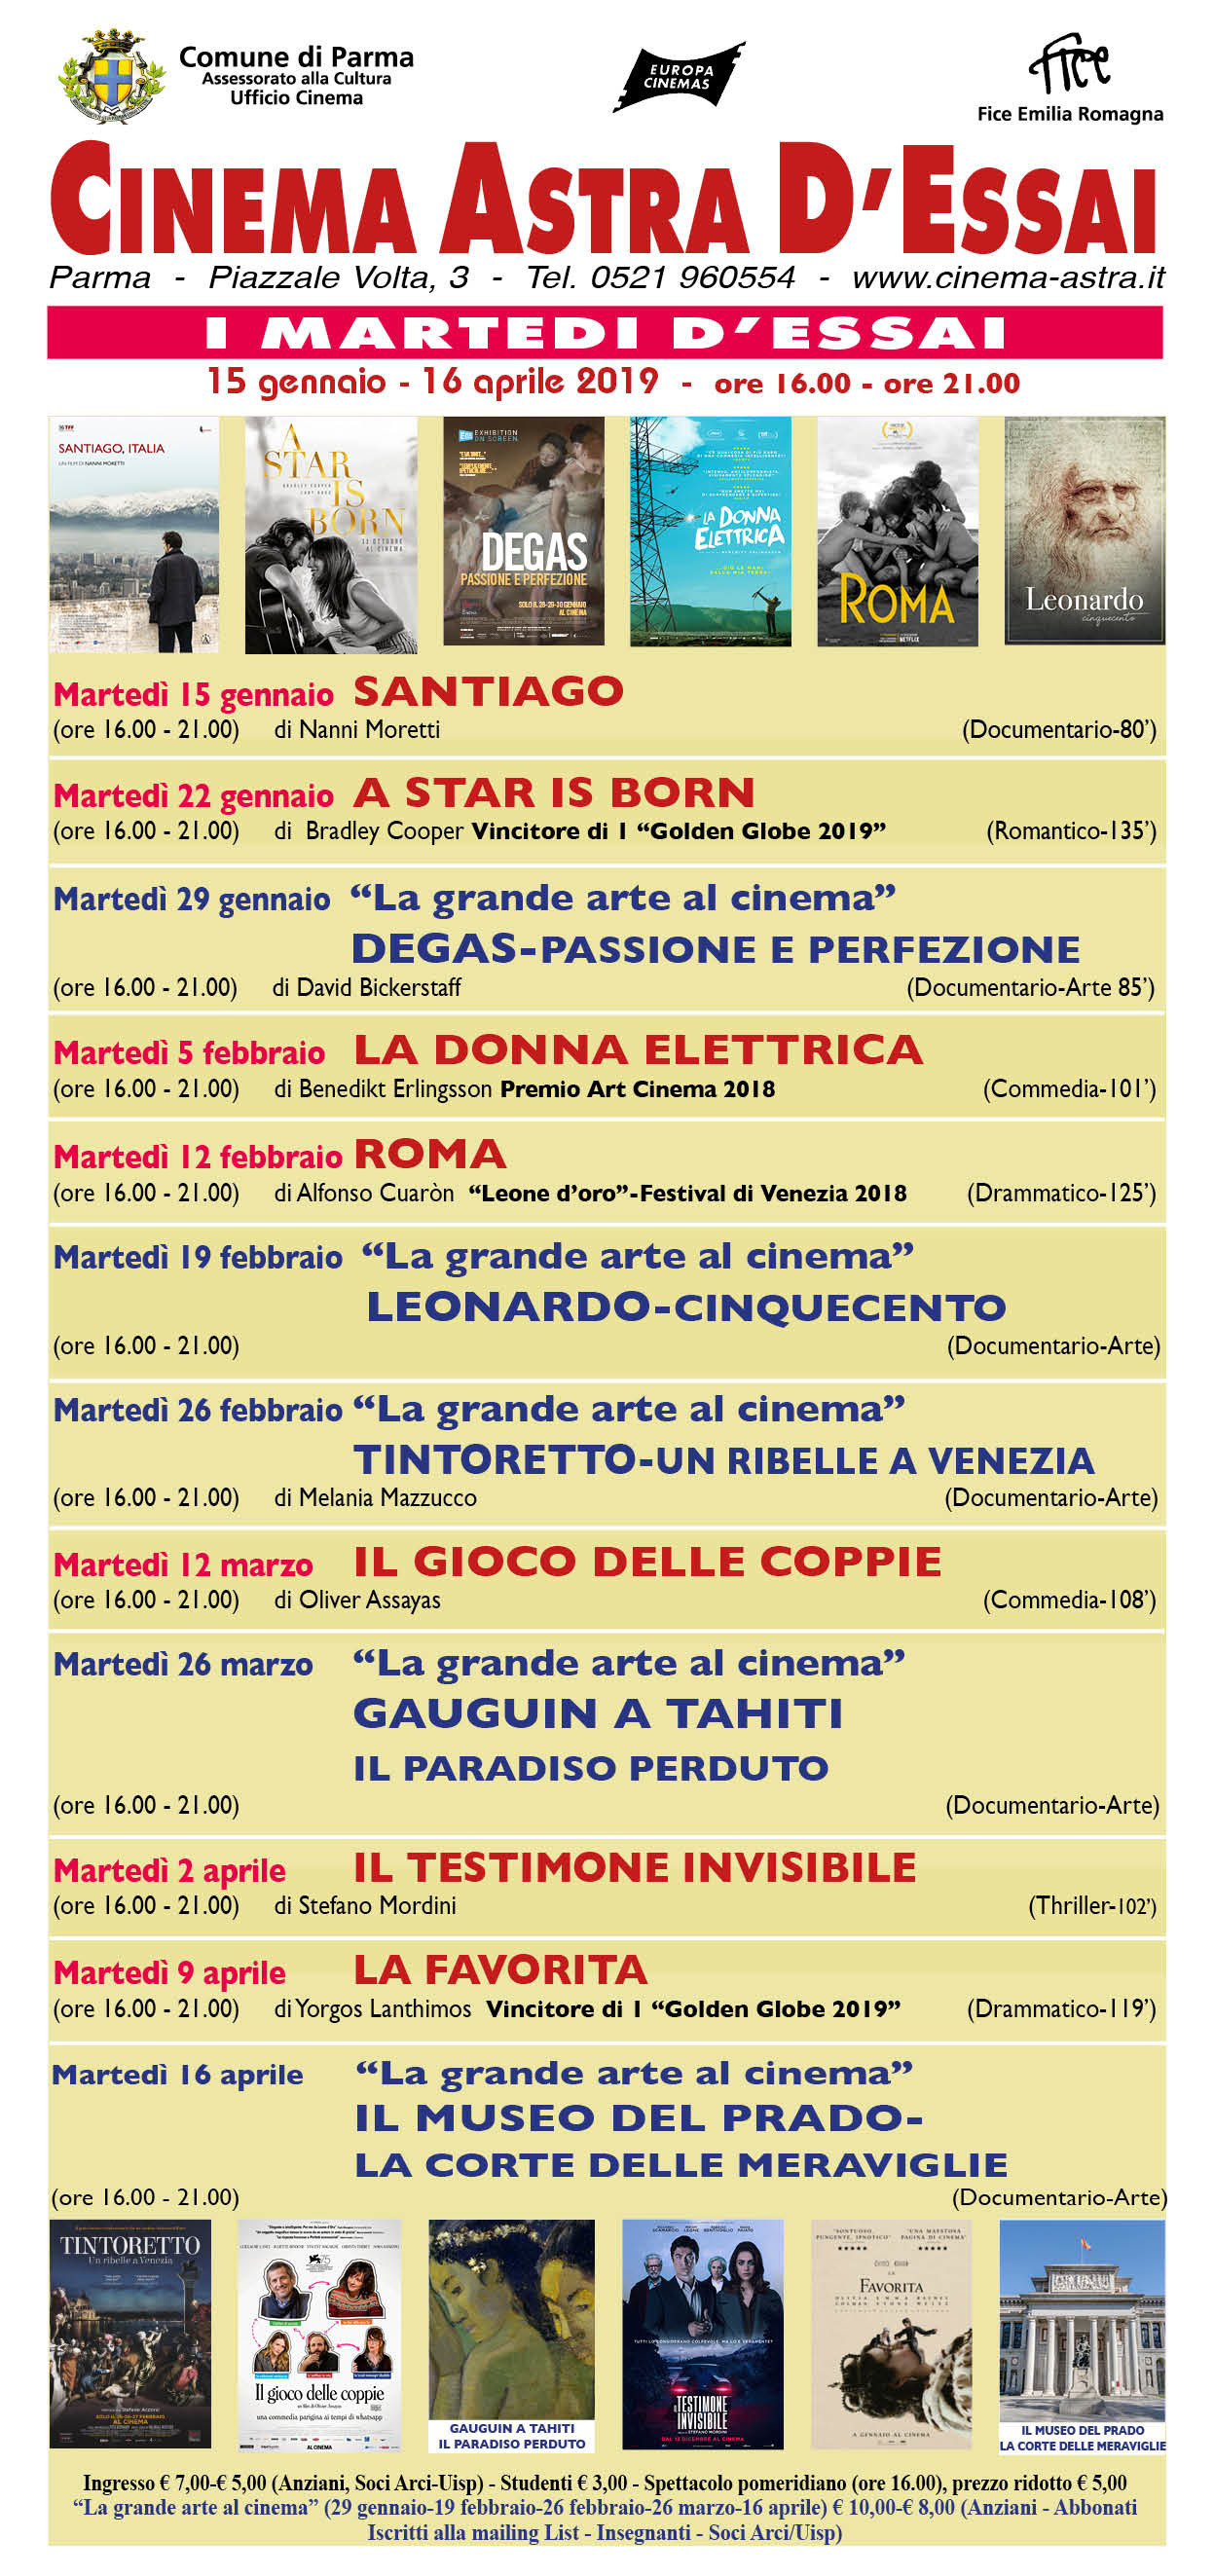 I MARTEDI' D'ESSAI al Cinema Astra di Parma, programma